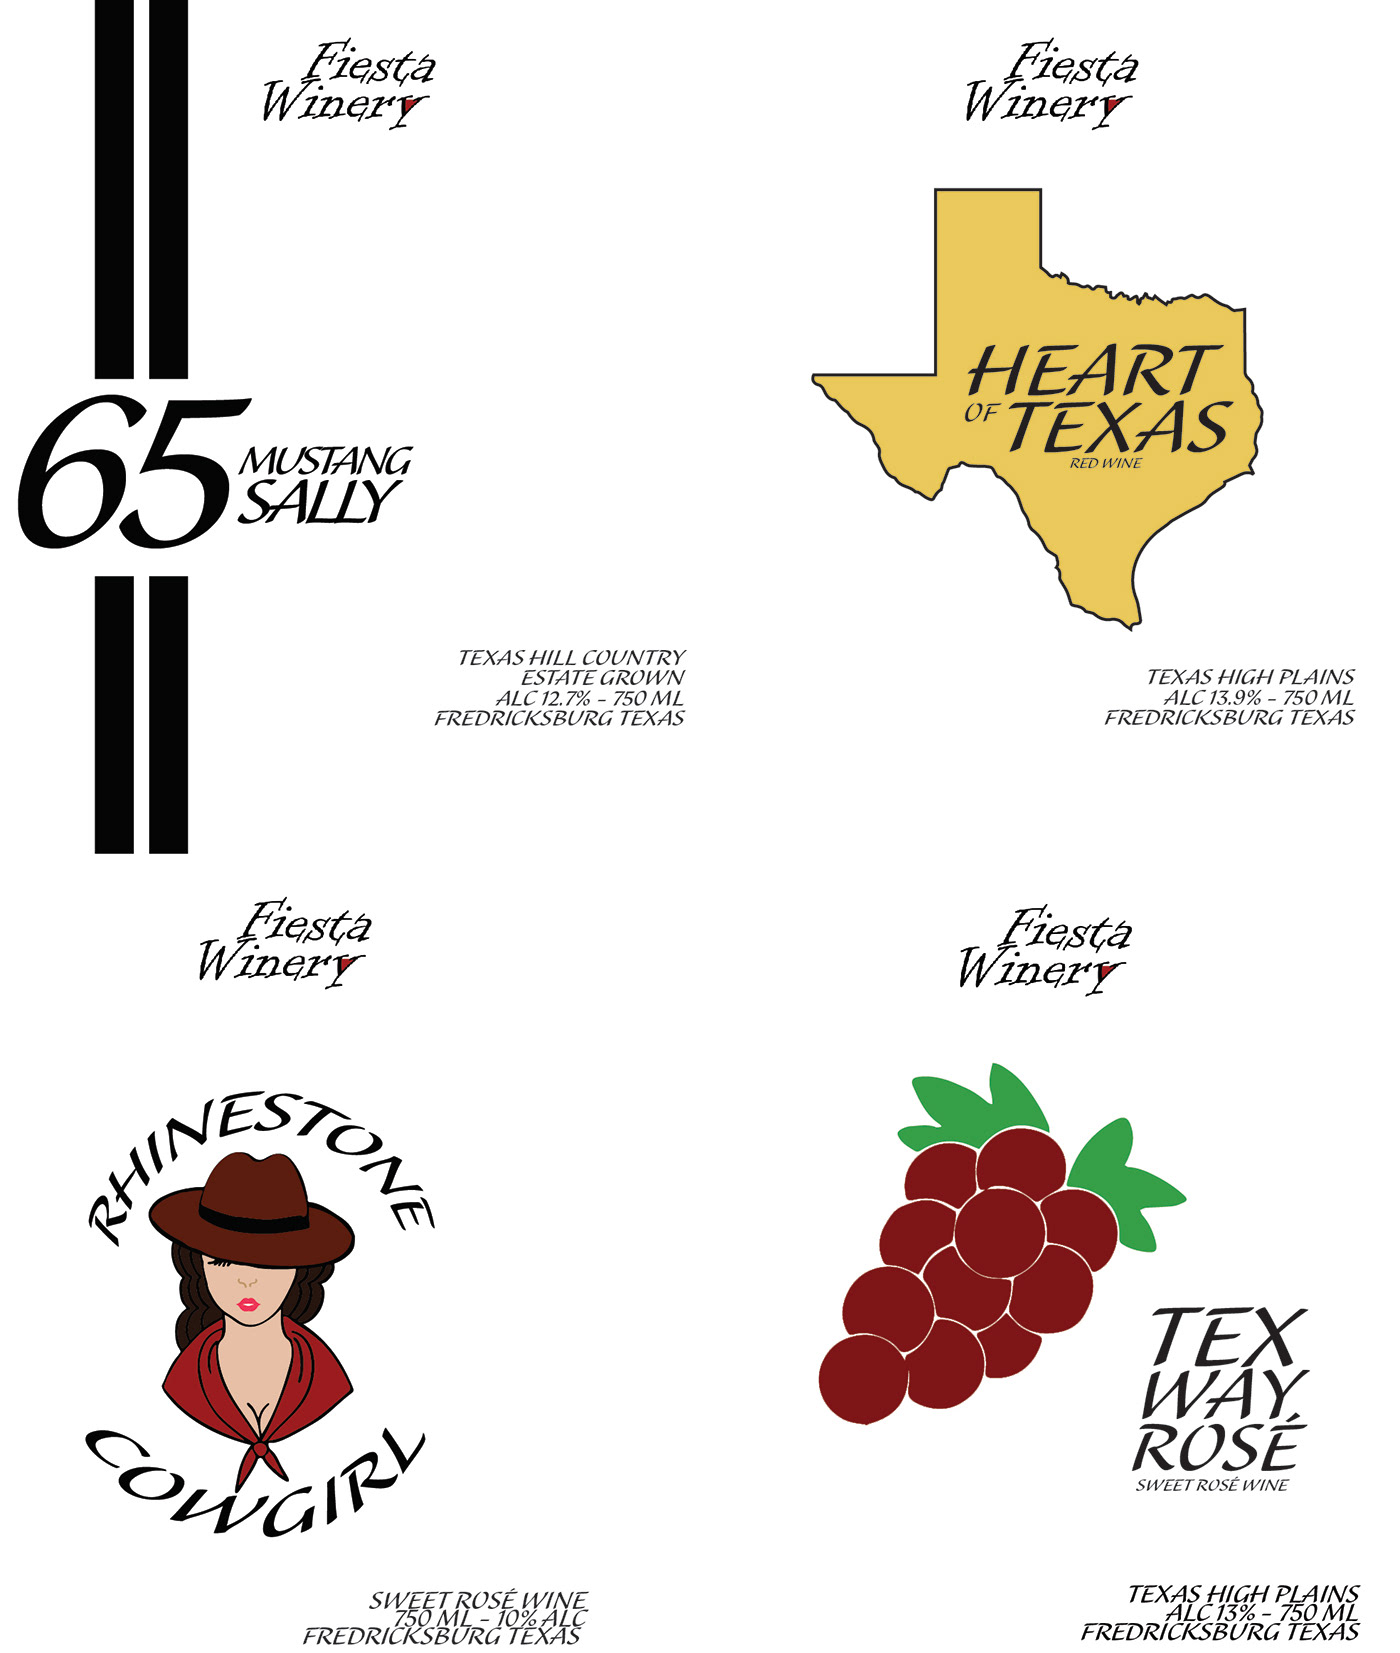 Fredricksburg Rebrand texas wine